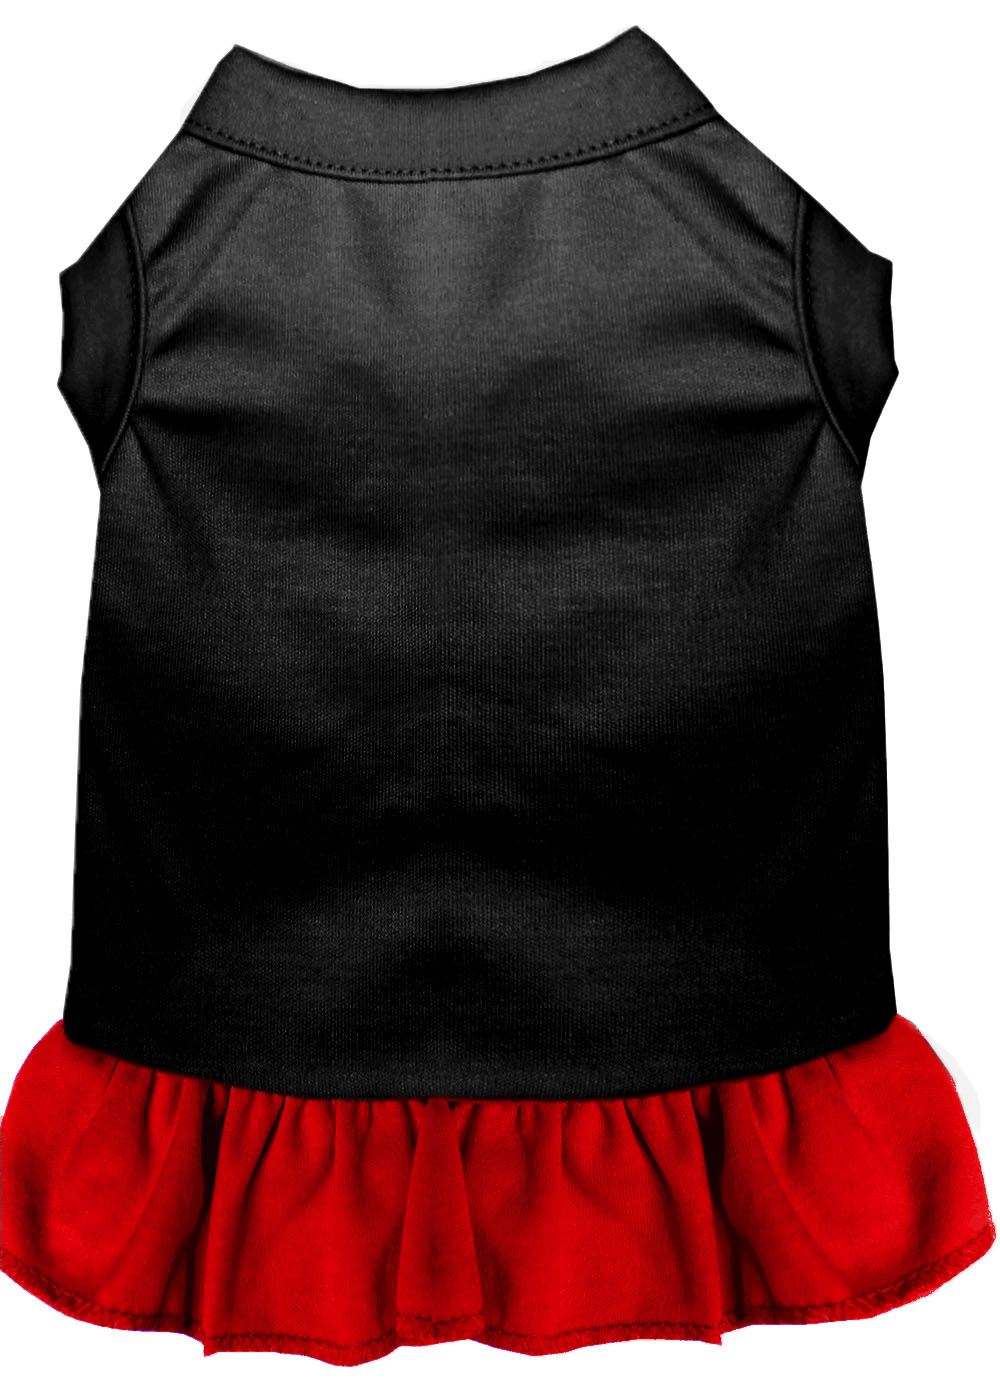 Plain Pet Dress Black with Red XS